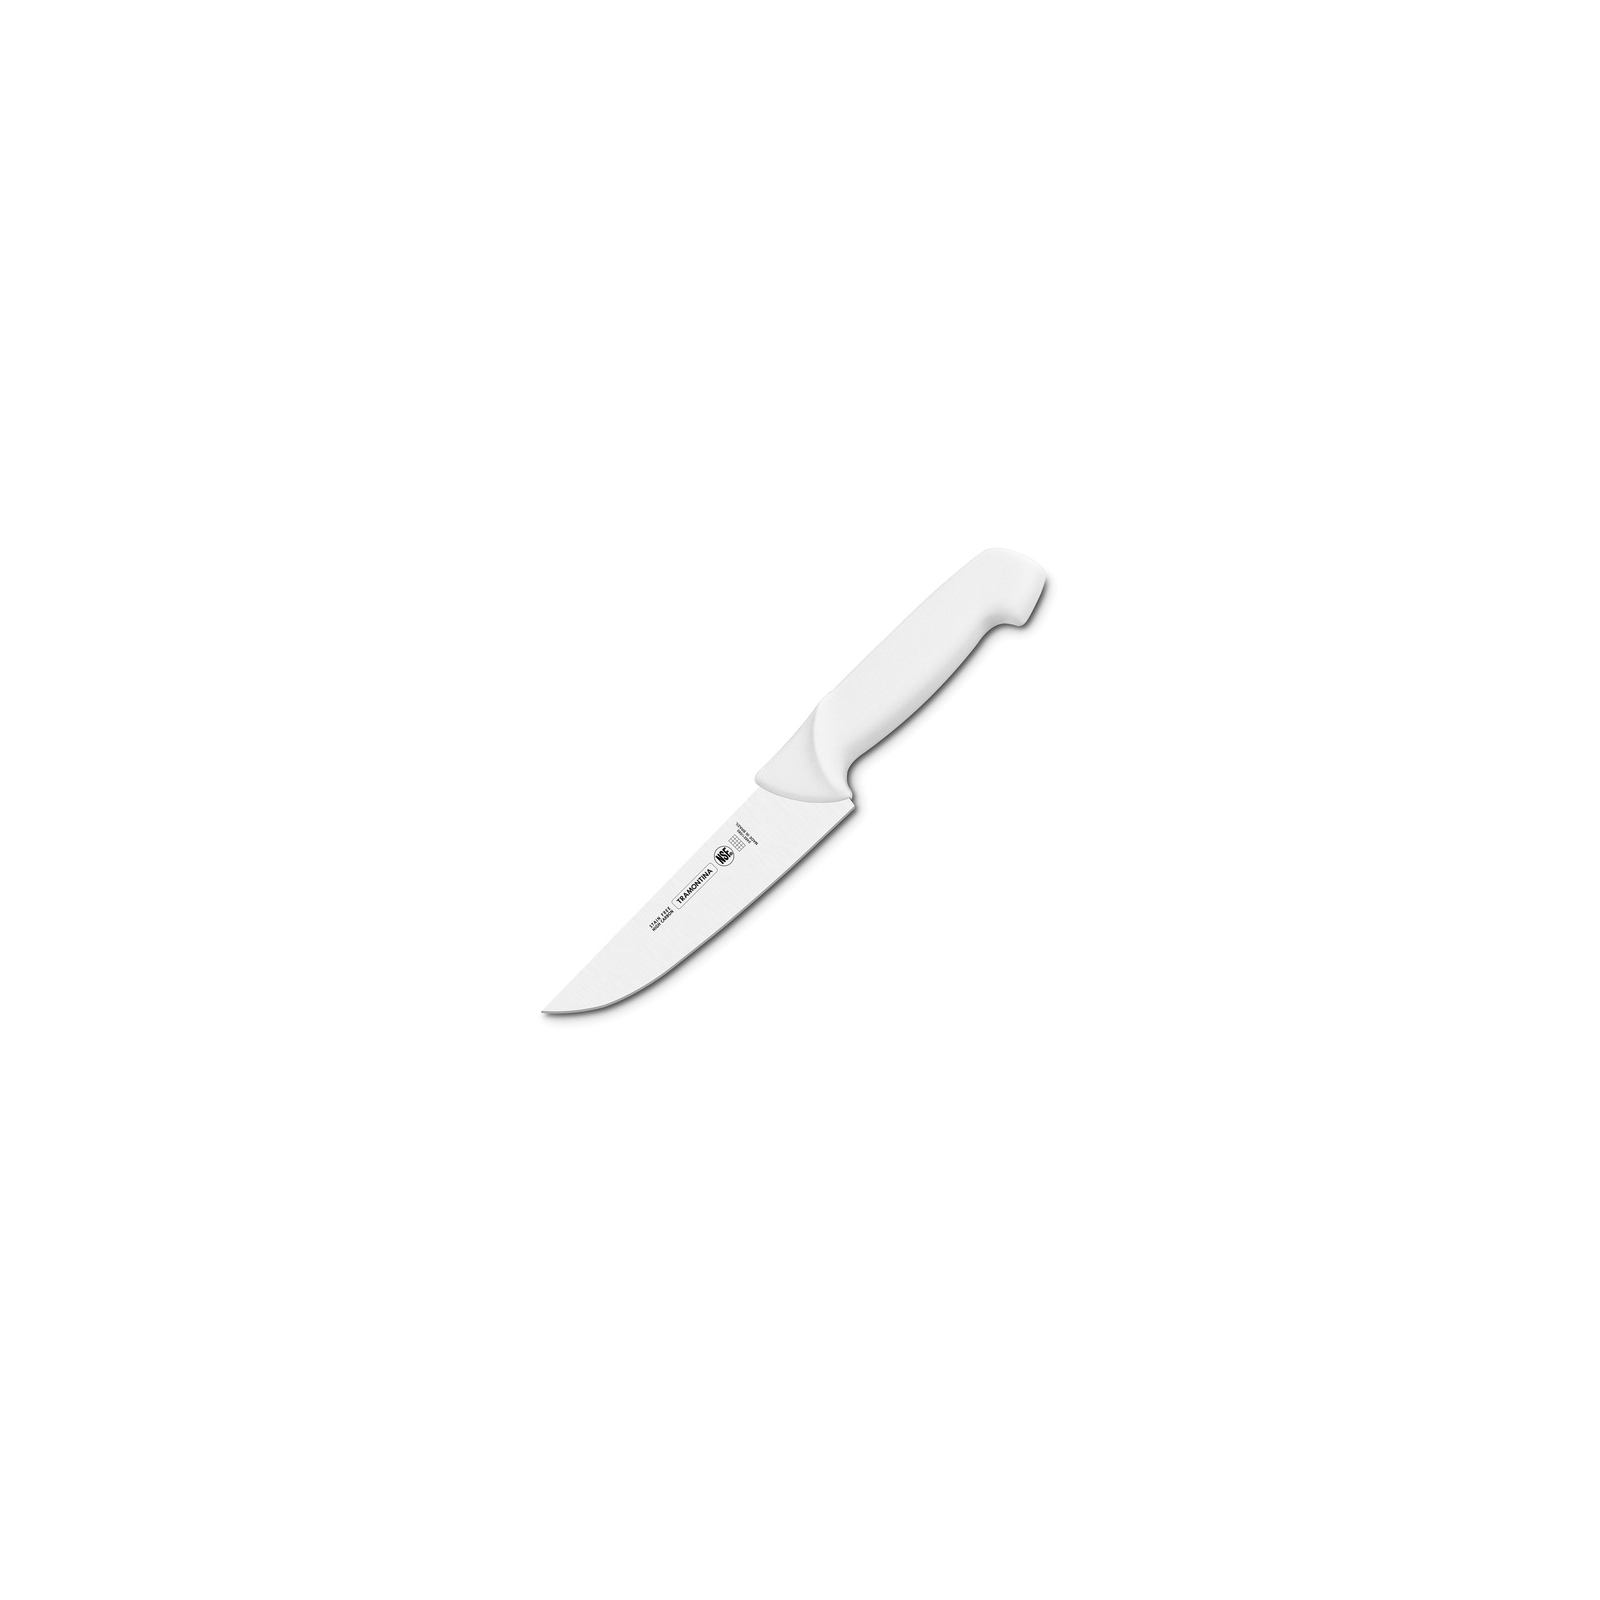 Кухонный нож Tramontina Professional Master обвалочный 203 мм White (24621/088)